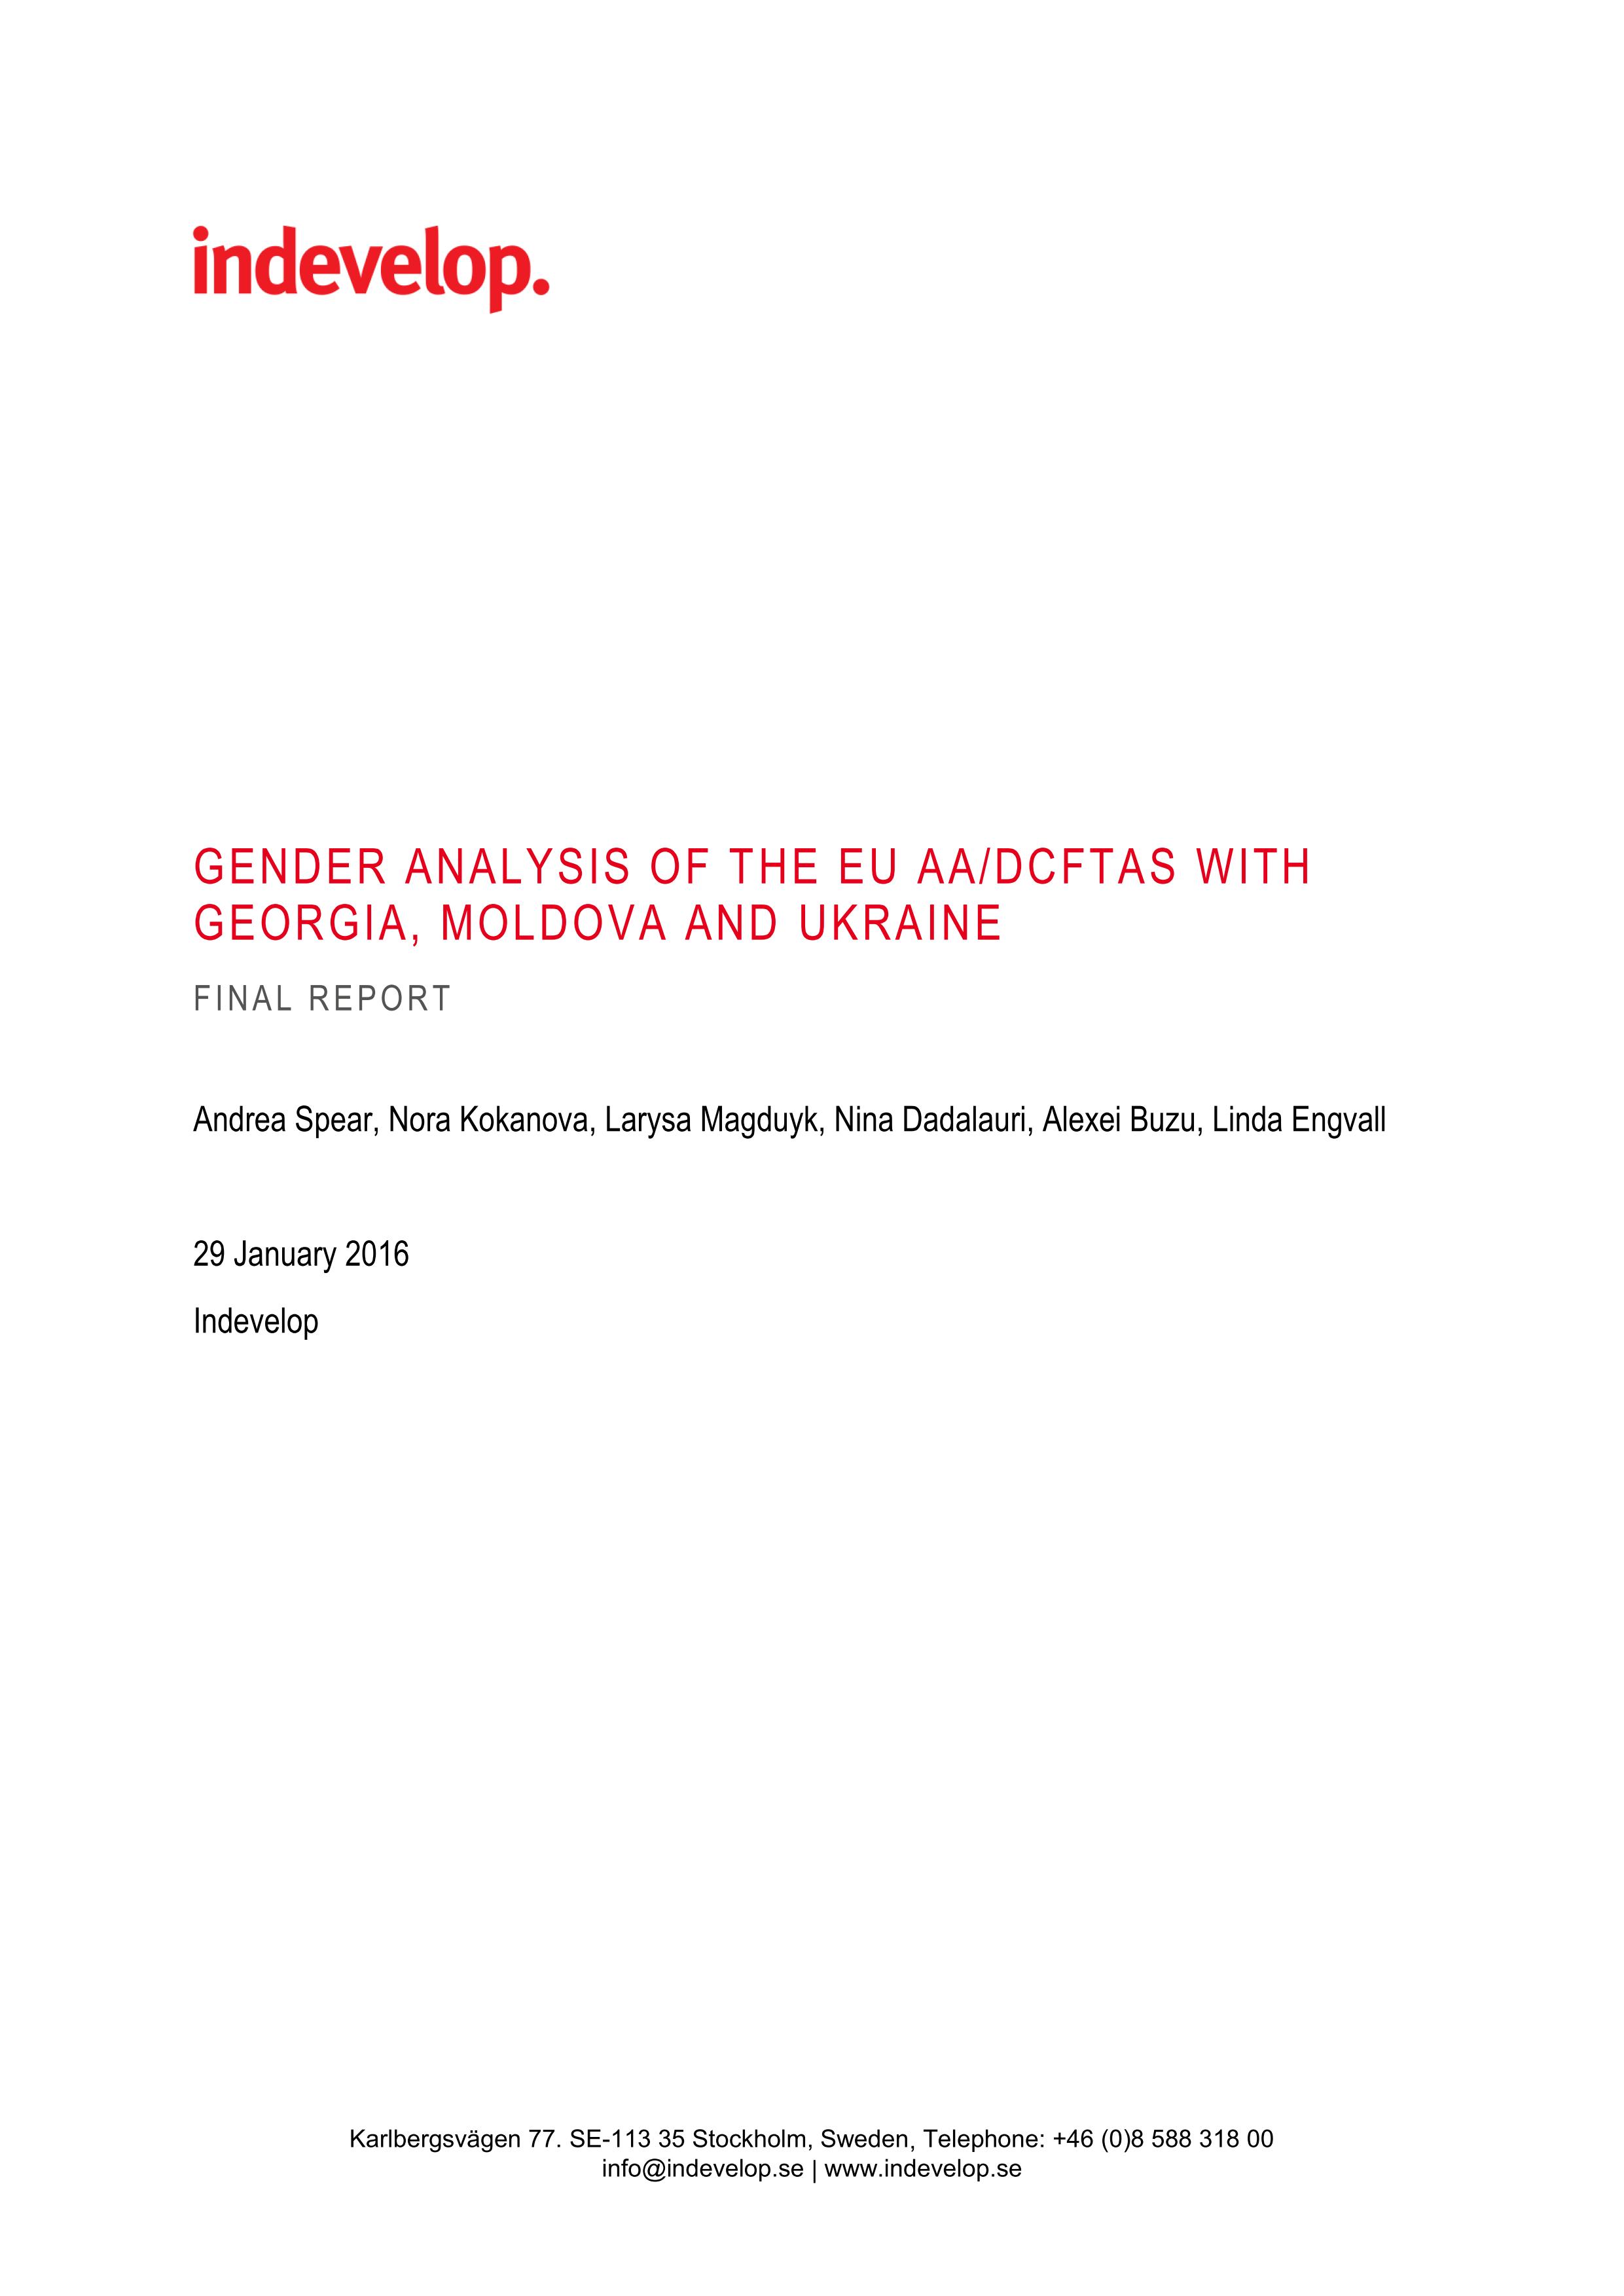 Final Report: Gender Analysis of the EU AA/DCFTAs with Georgia, Moldova and Ukraine